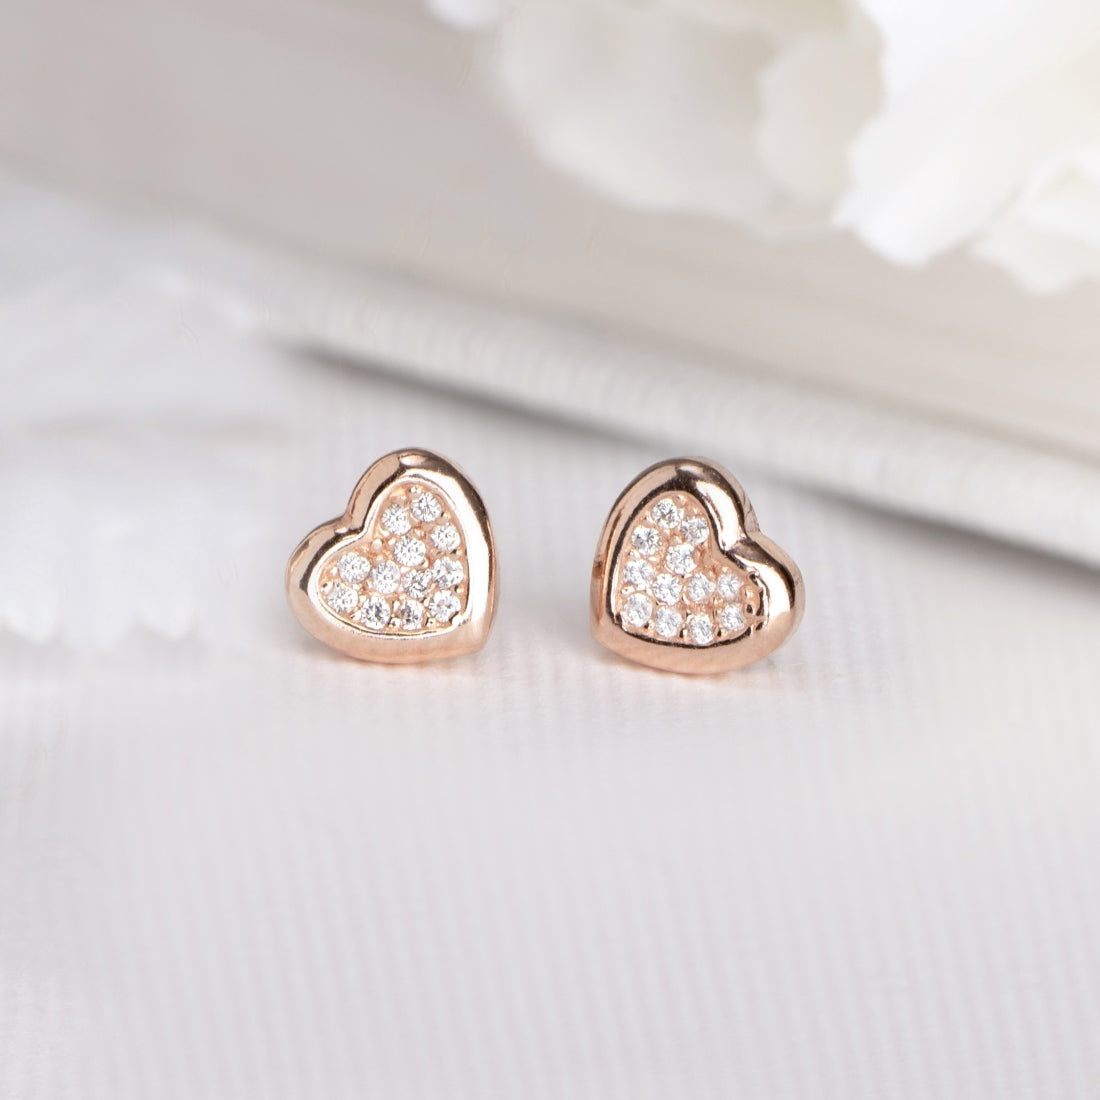 Heartfelt Elegance Rose Gold-Plated Cubic Zirconia 925 Sterling Silver Earrings